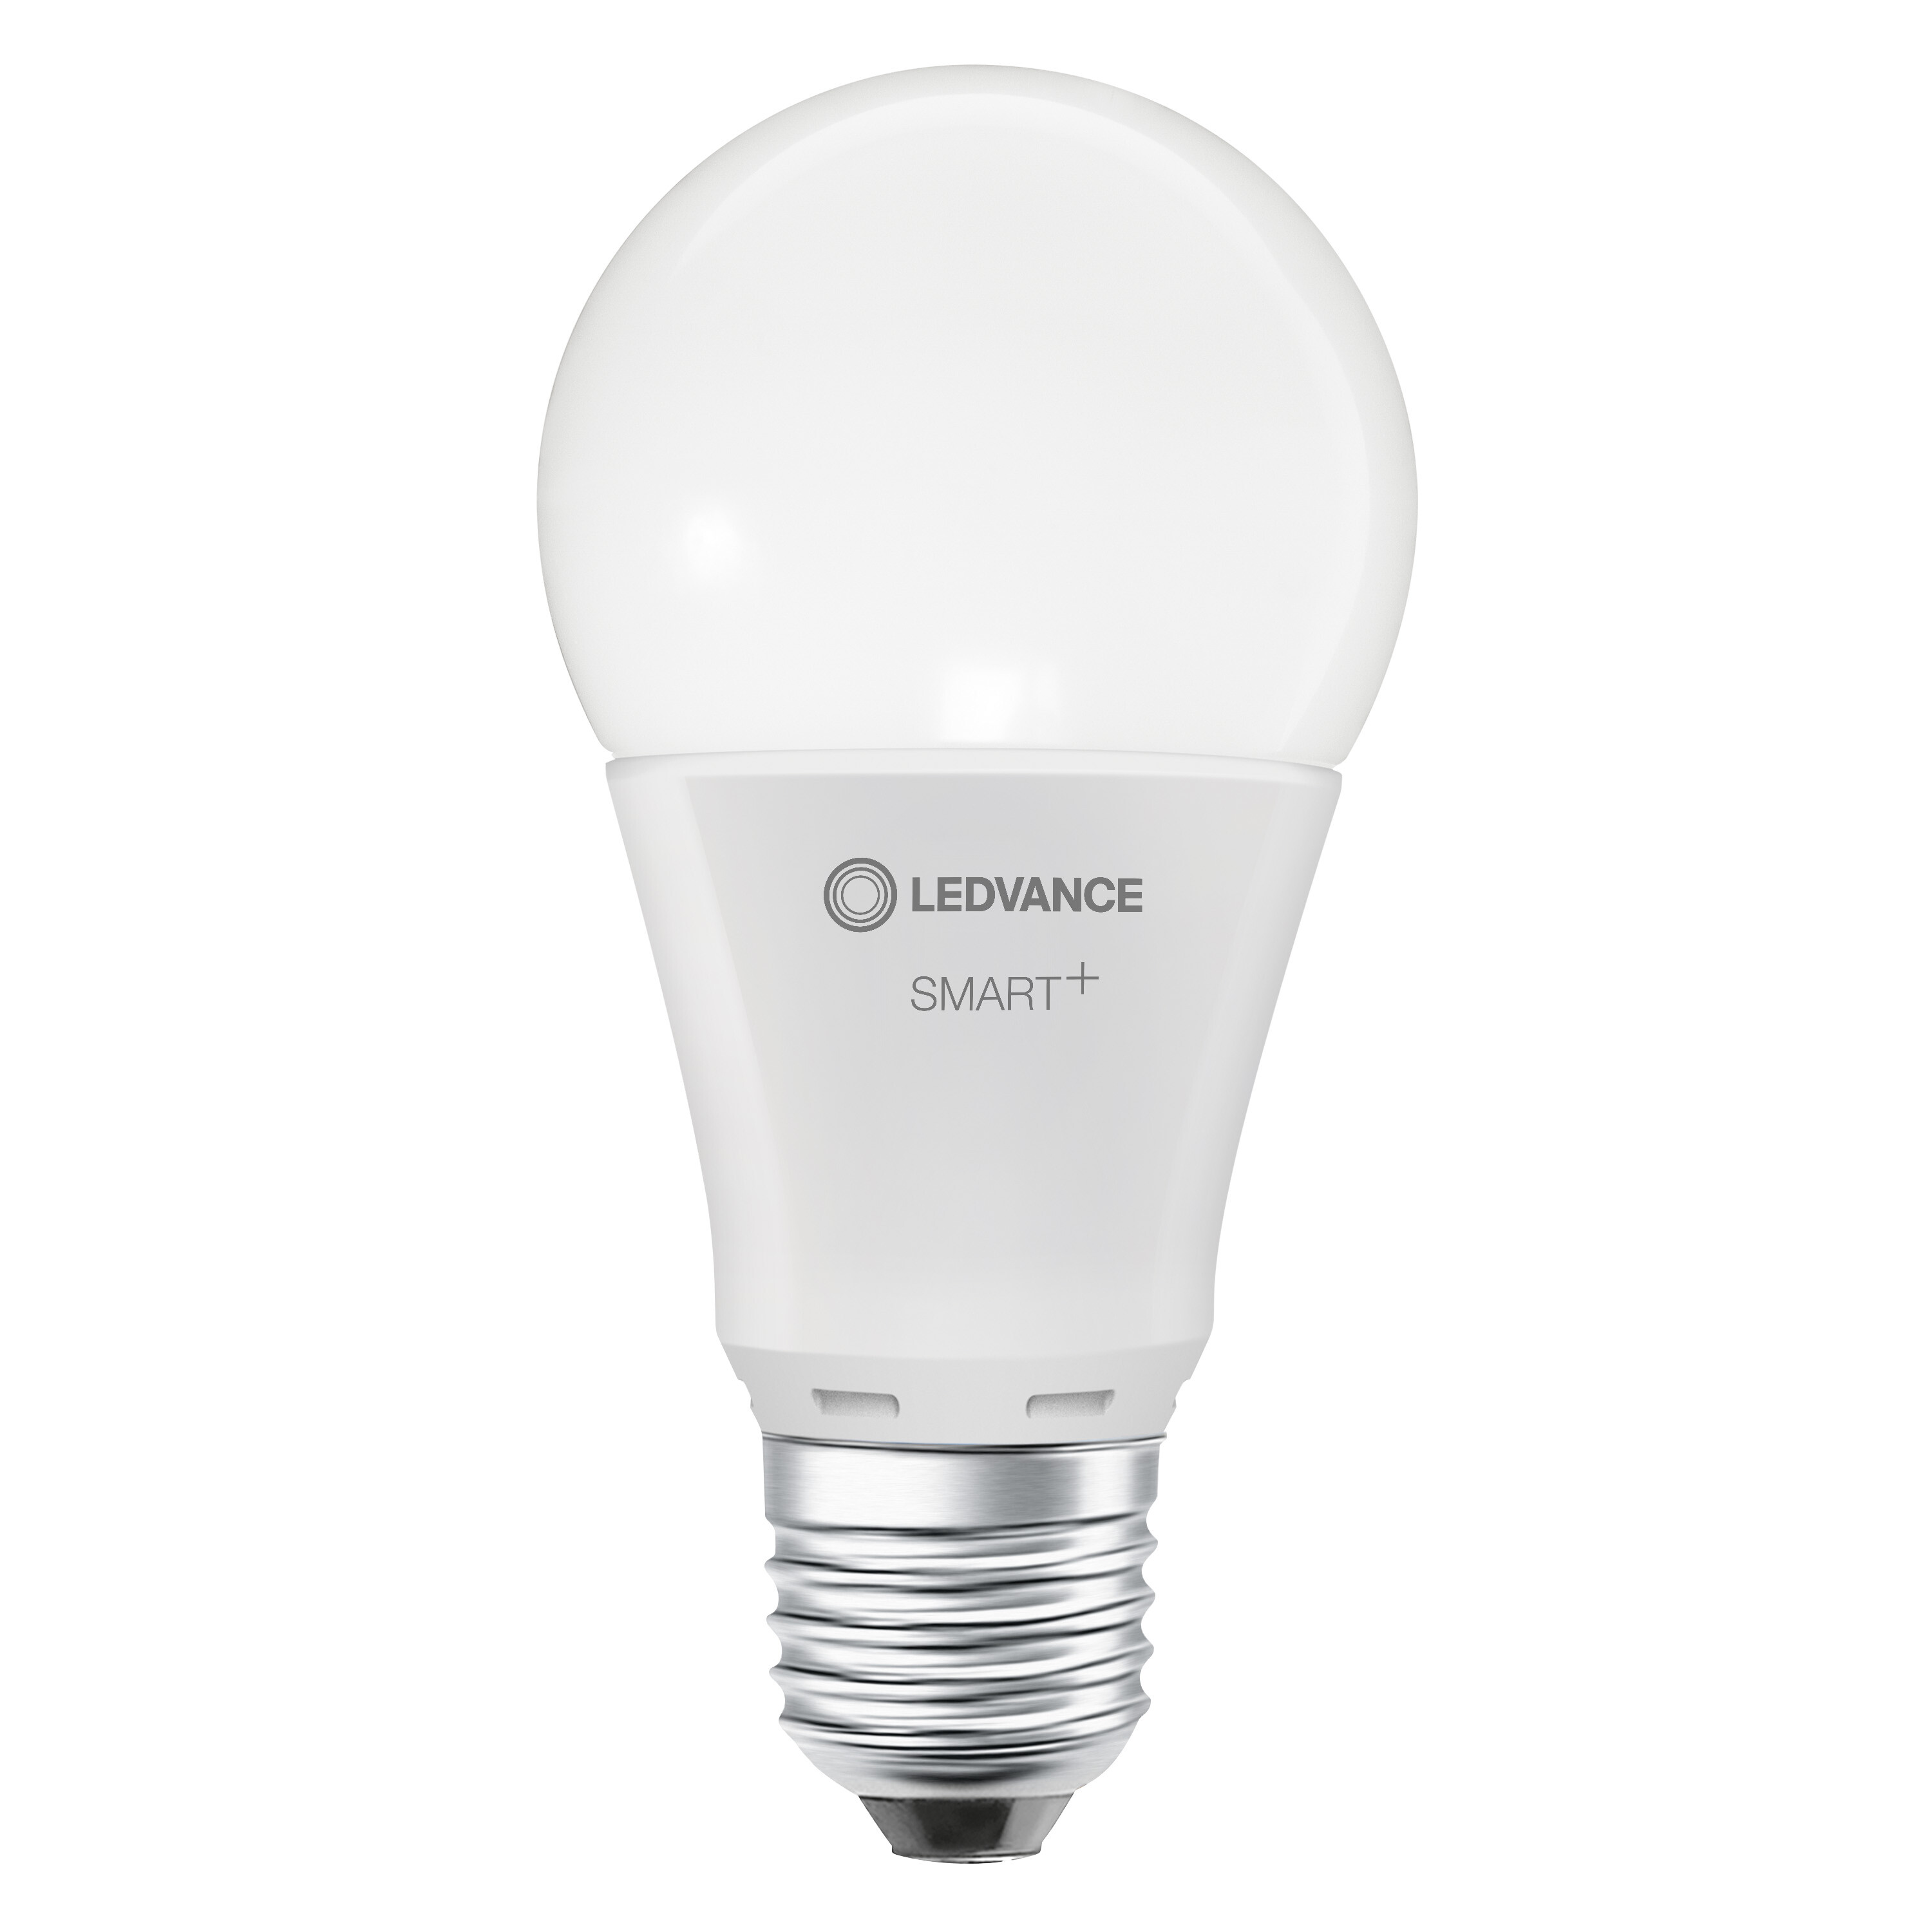 LEDVANCE SMART+ WiFi Classic Tunable änderbar Lampe White LED Lichtfarbe